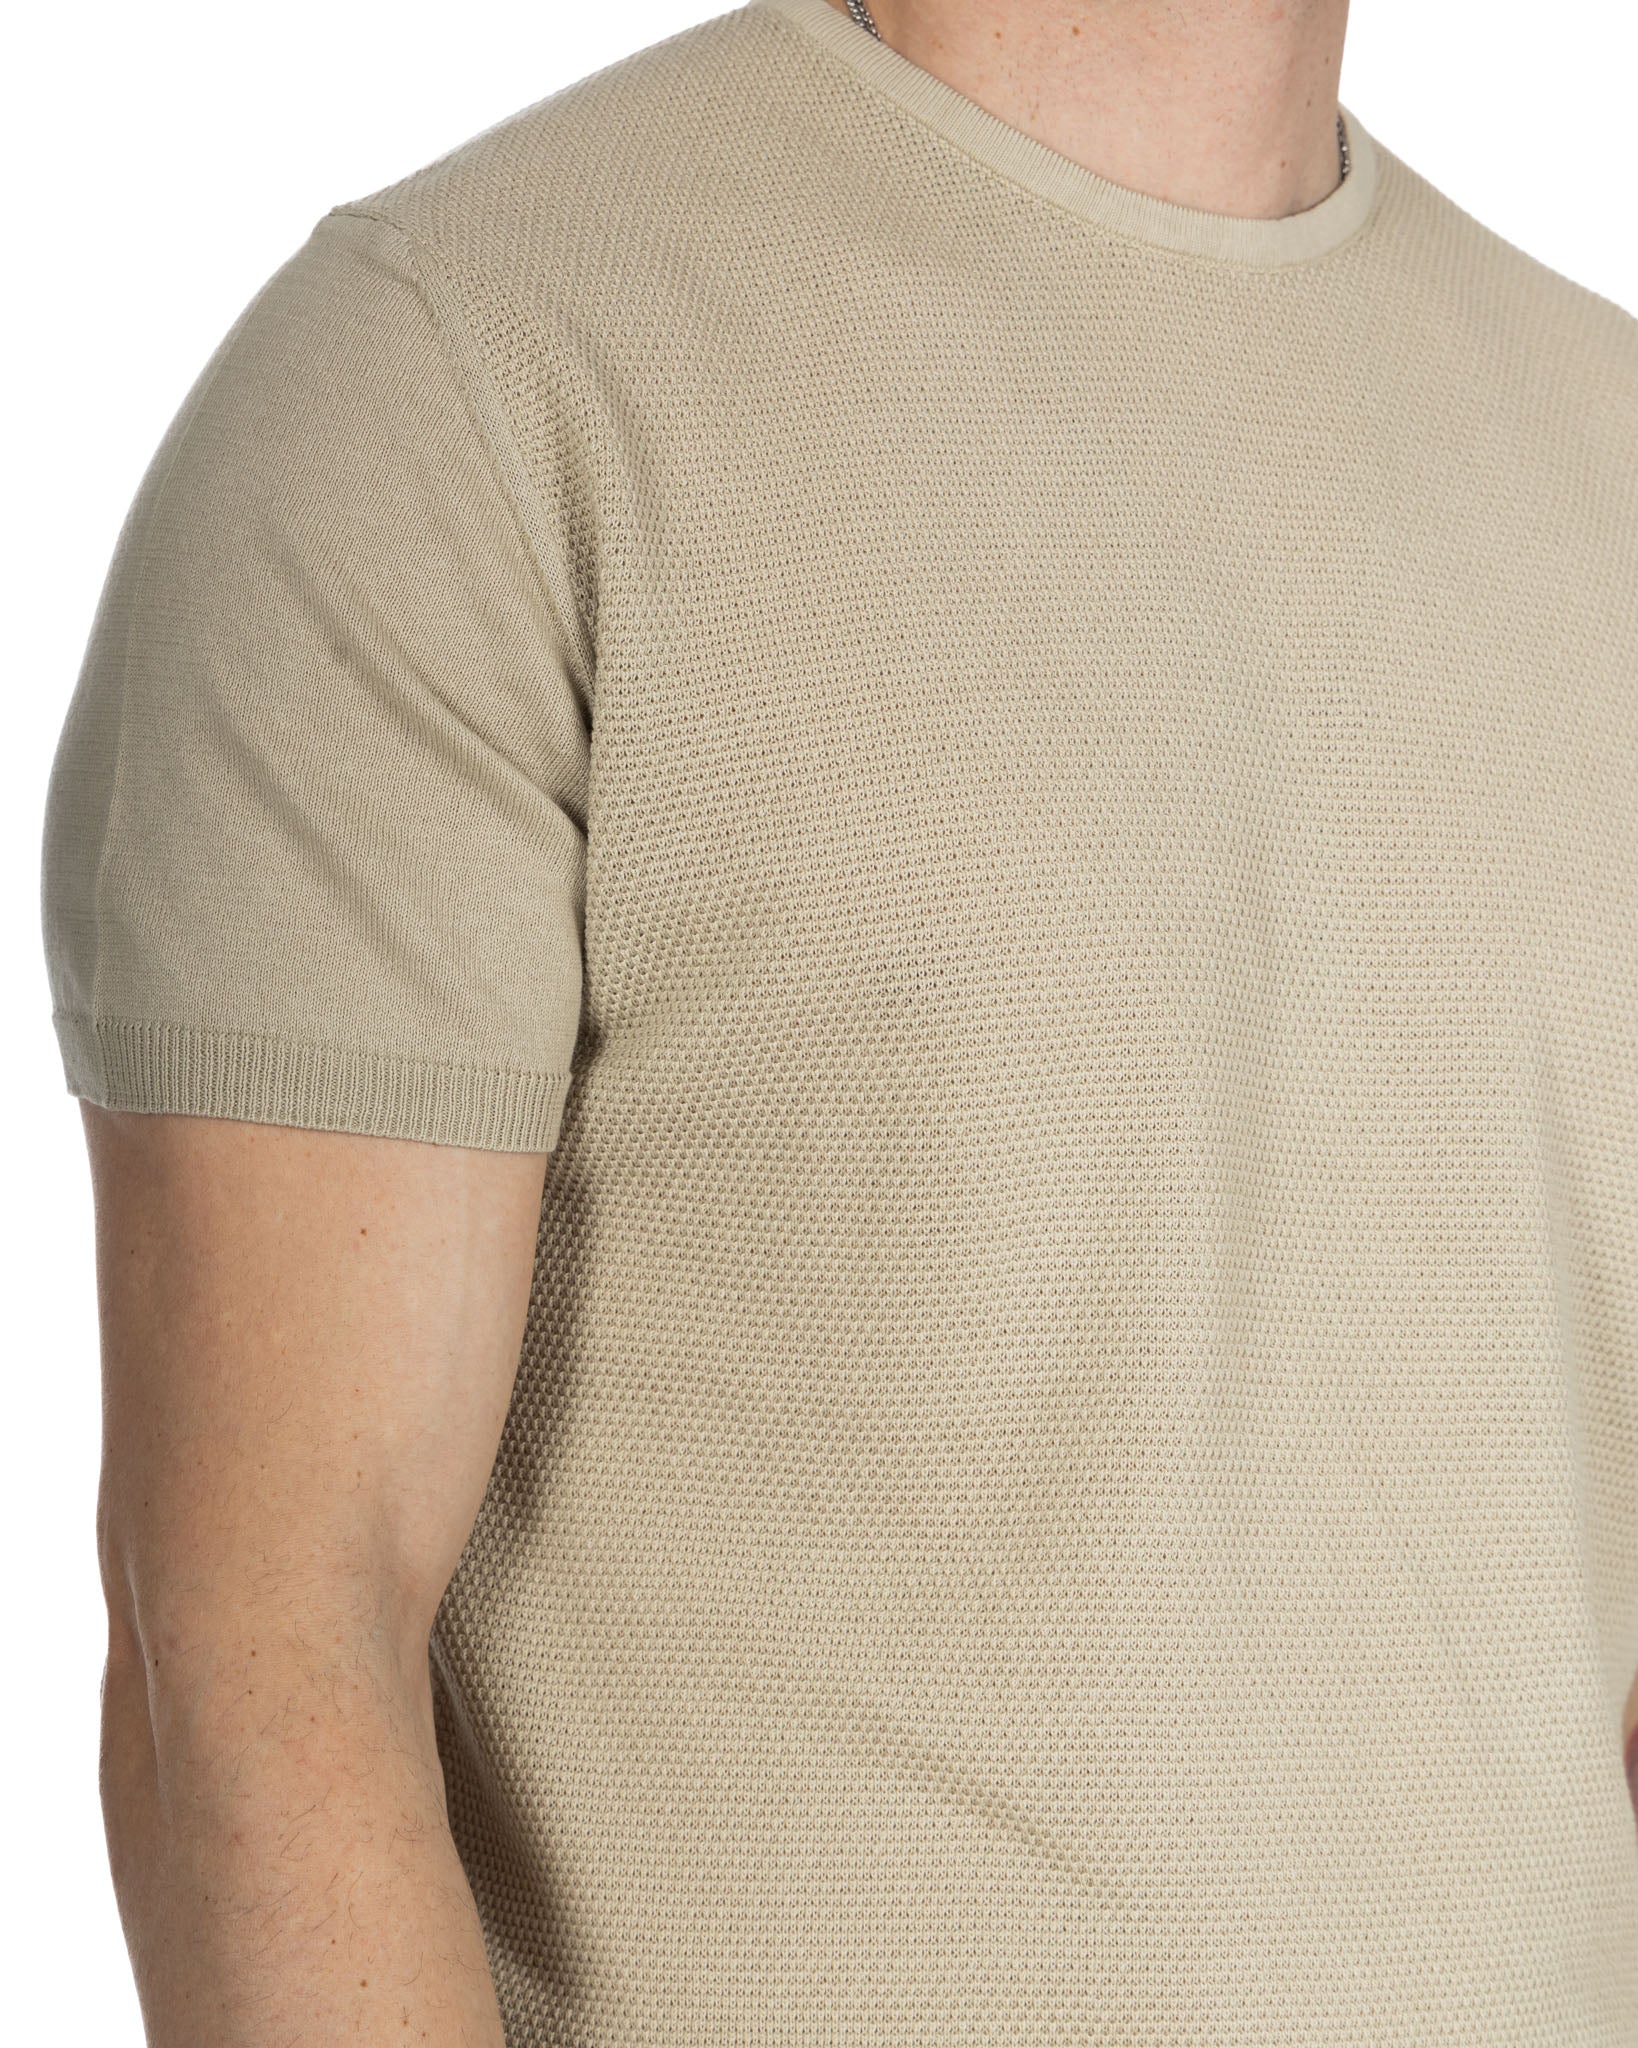 Lorenzo - t-shirt en maille jacquard beige